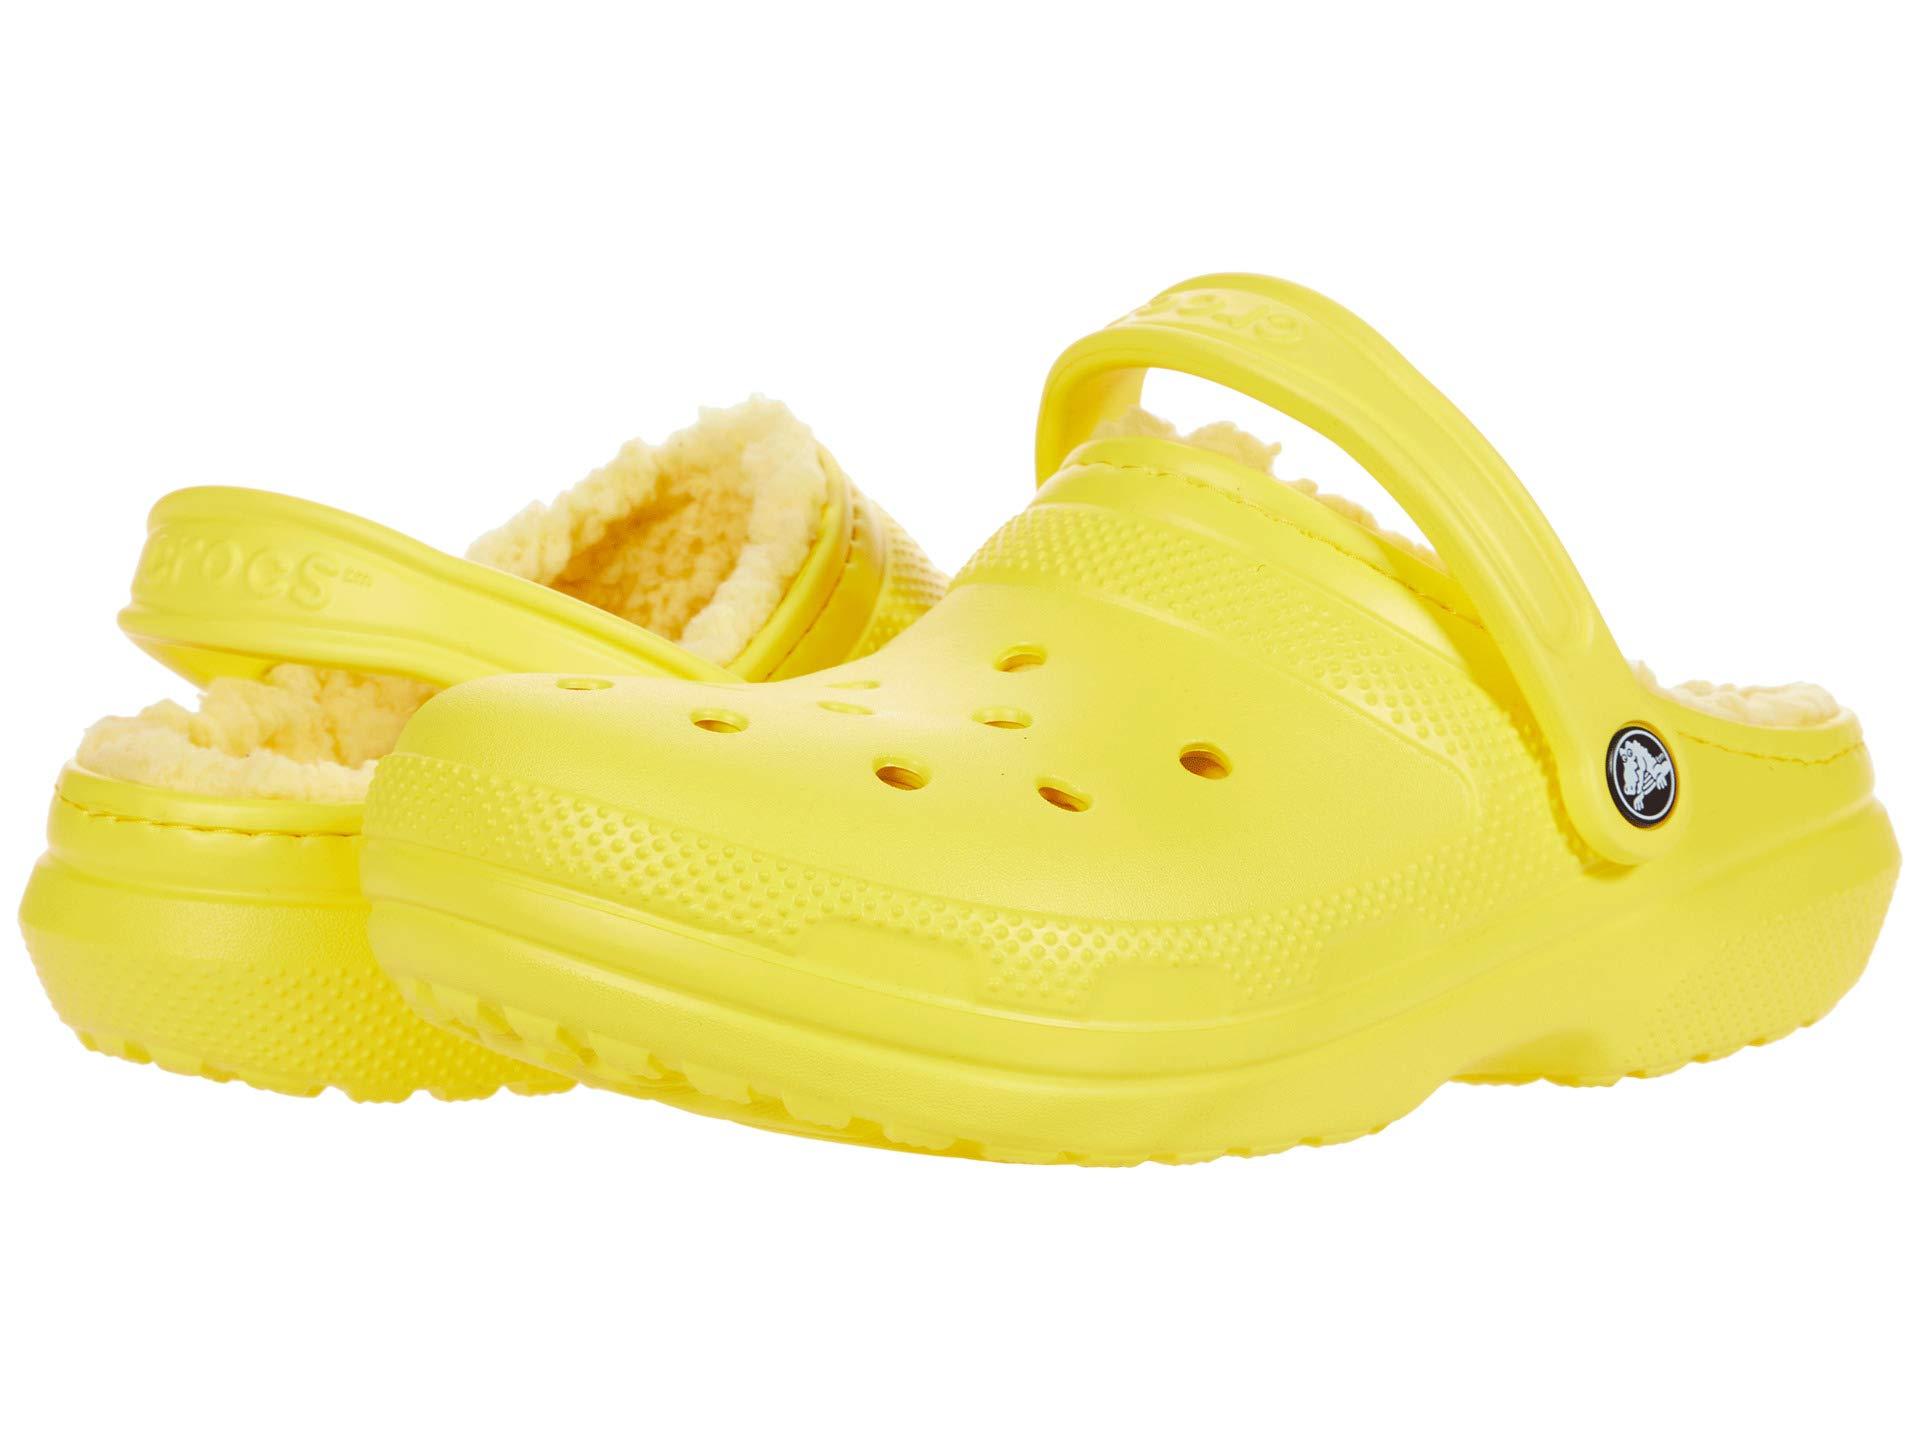 crocs classic lined clog